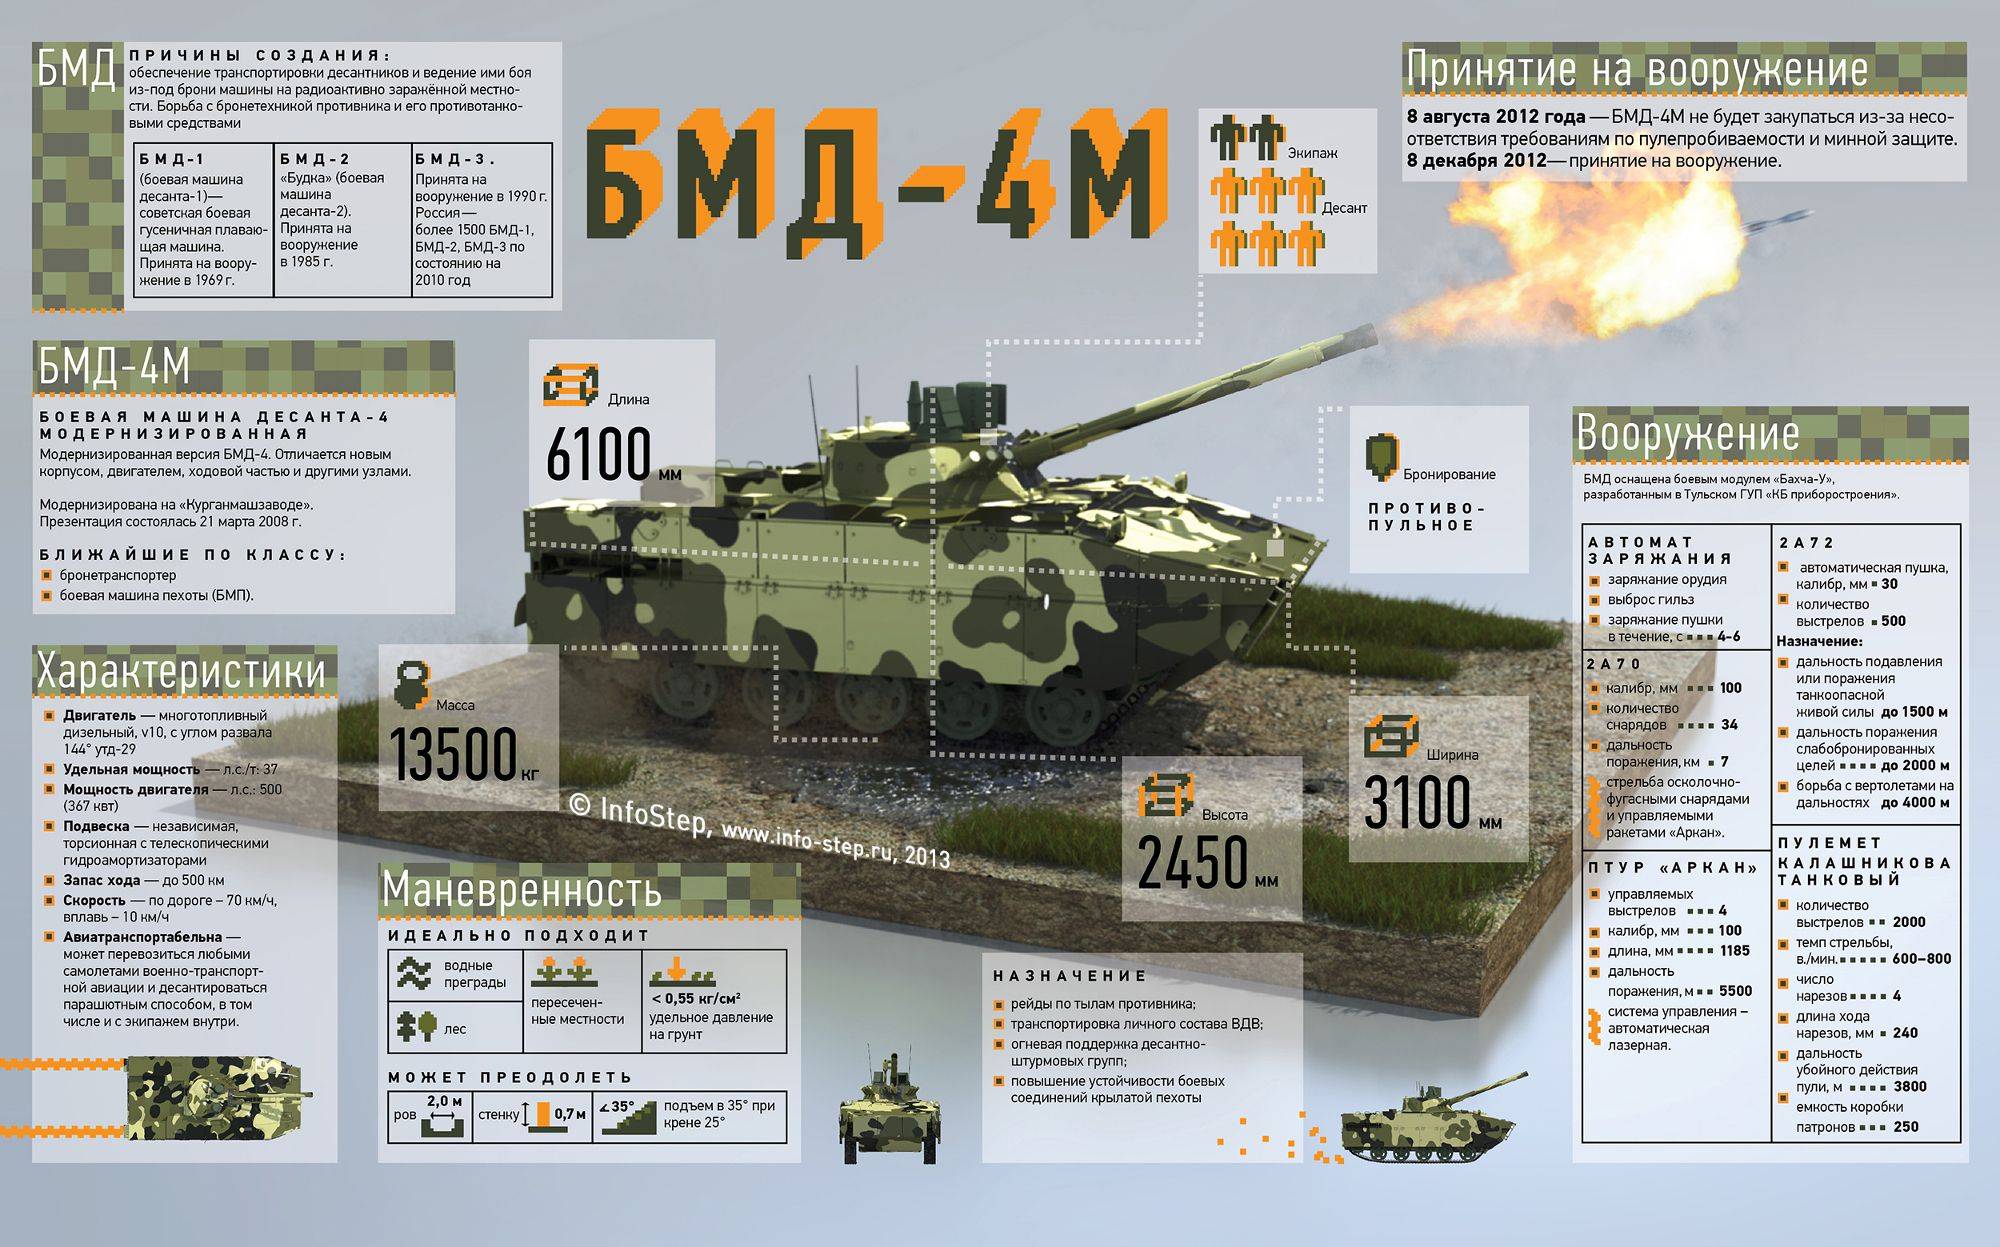 Бмд-2 (боевая машина десанта): описание, технические характеристики, вооружение